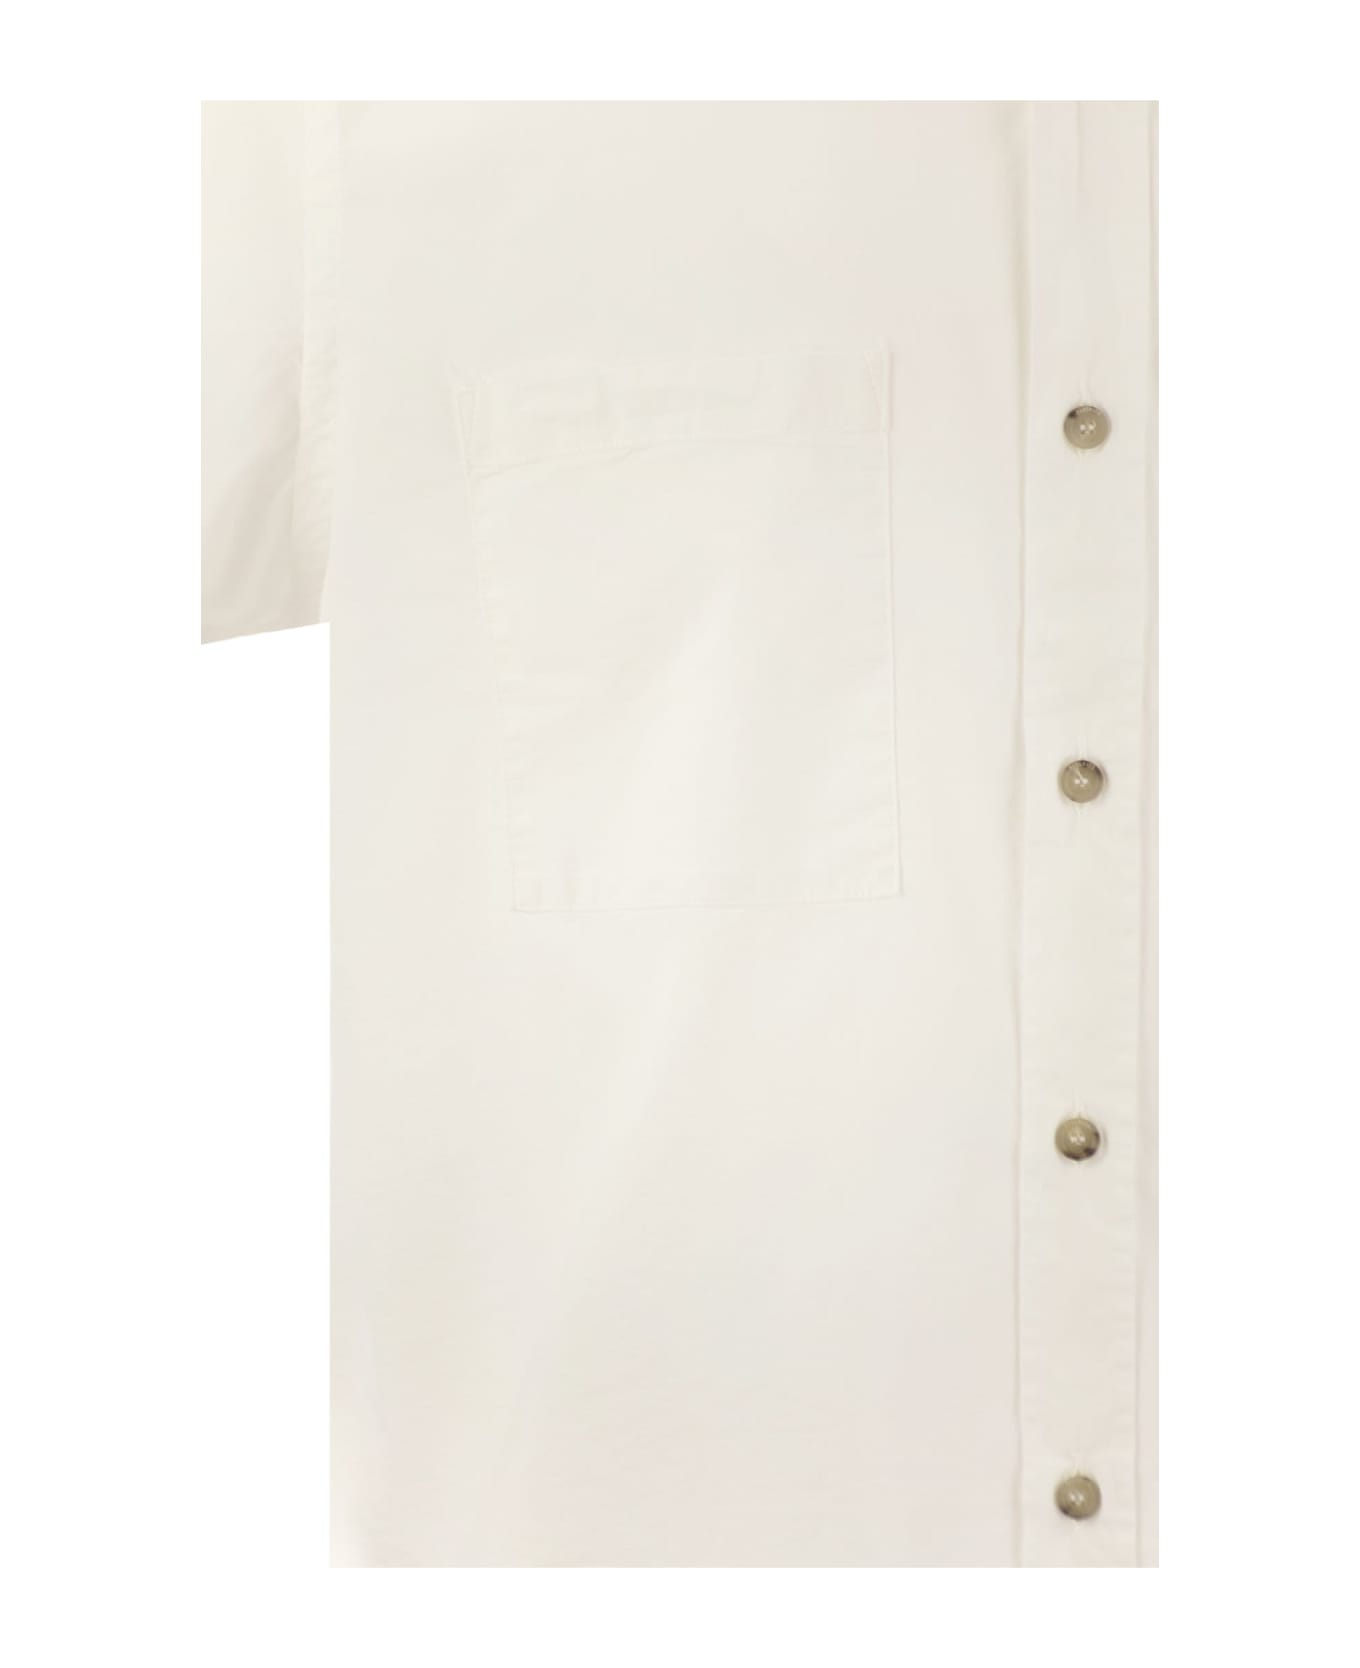 Peserico Stretch Cotton Poplin Shirt - White シャツ